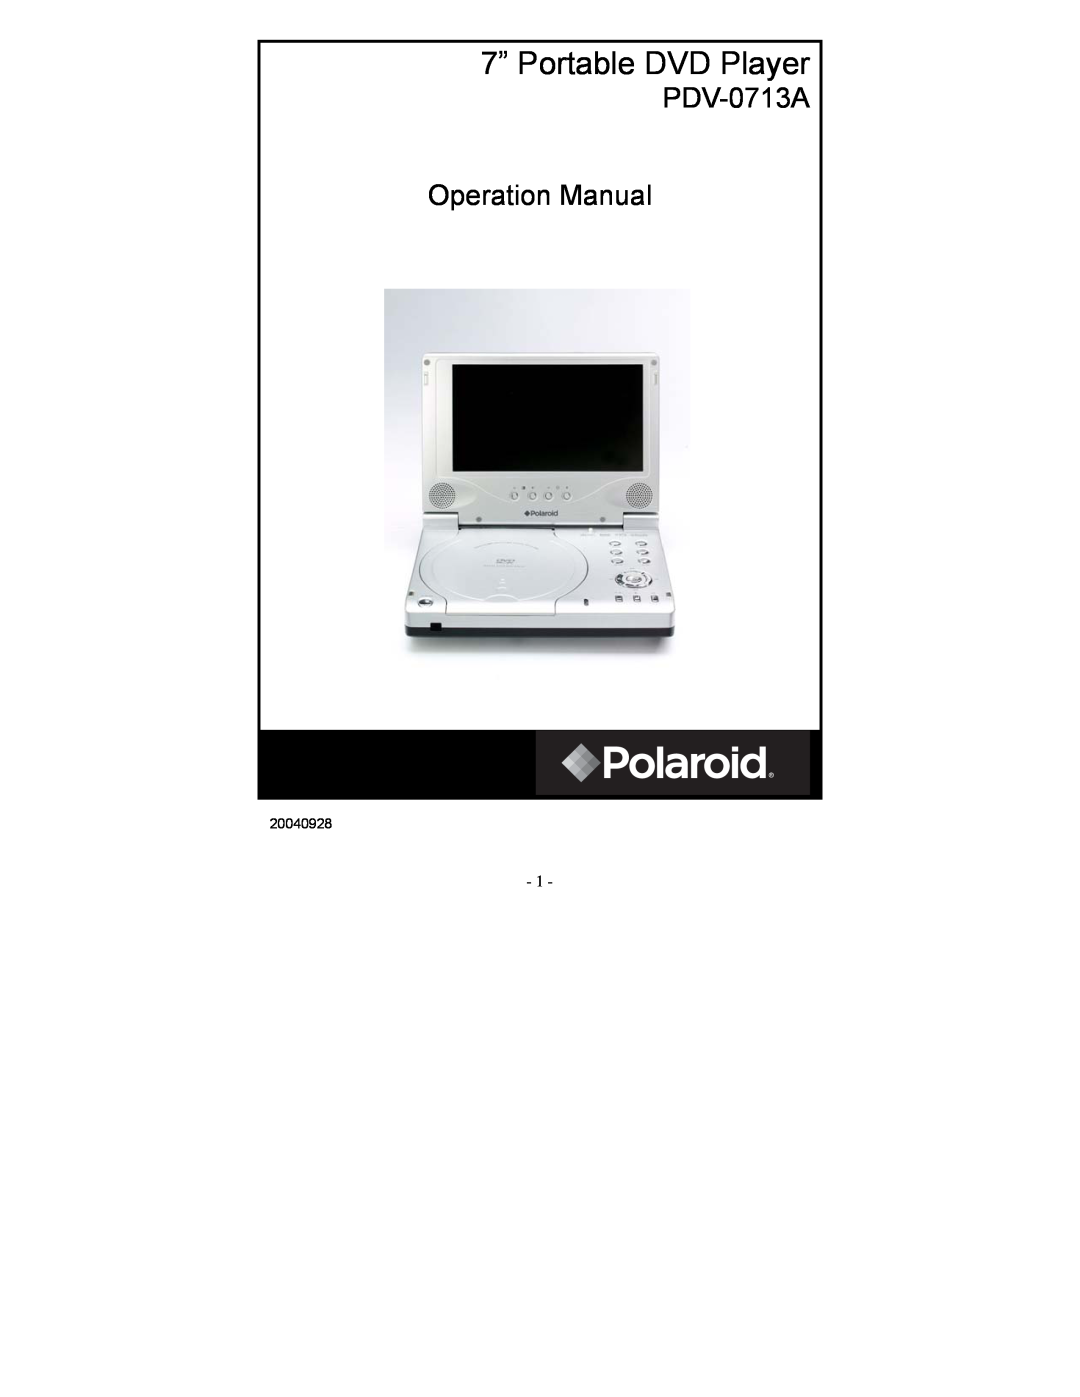 Polaroid operation manual 7” Portable DVD Player, PDV-0713A Operation Manual 